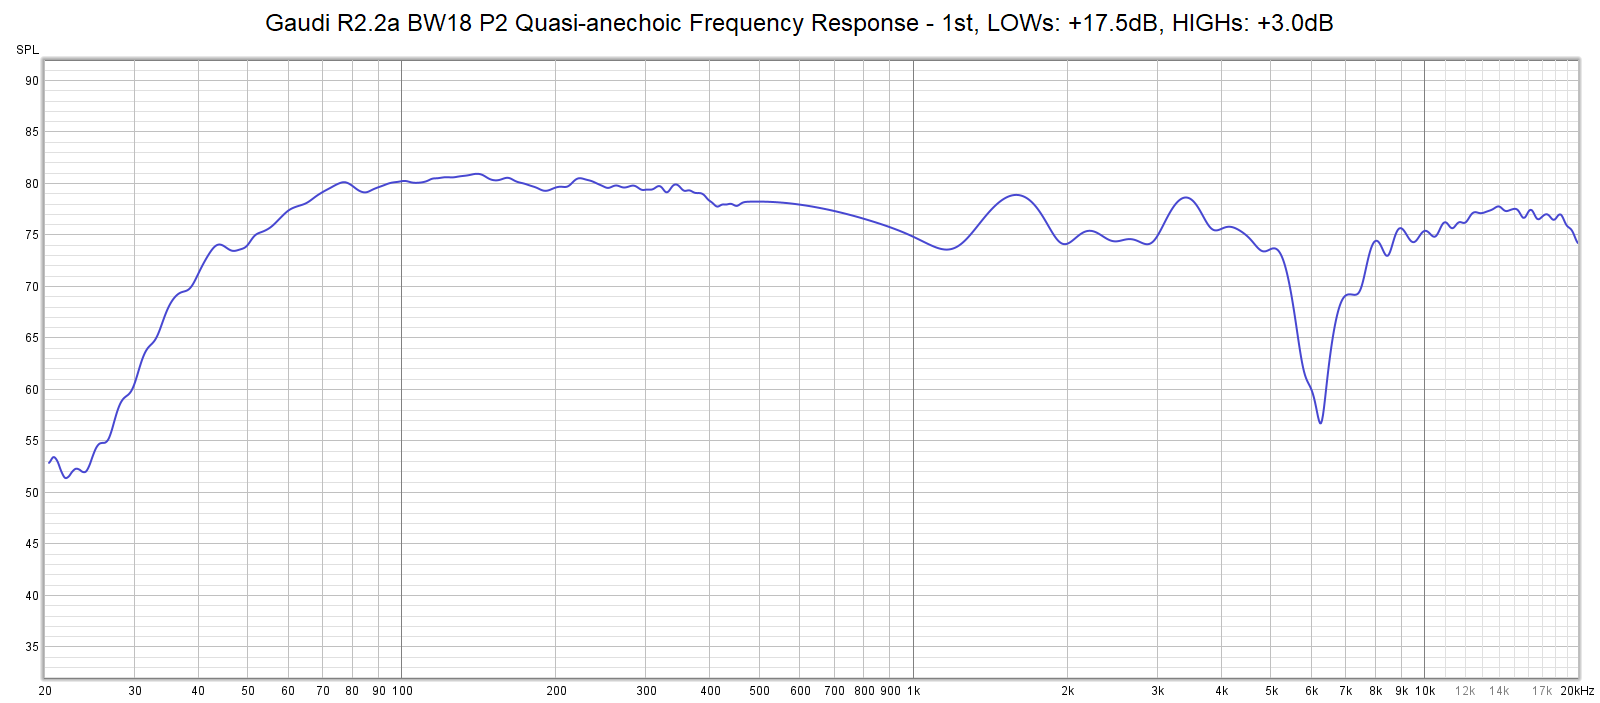 Quasi-anechoic frequency response of Gaudi R2.2 P2 normal polarity